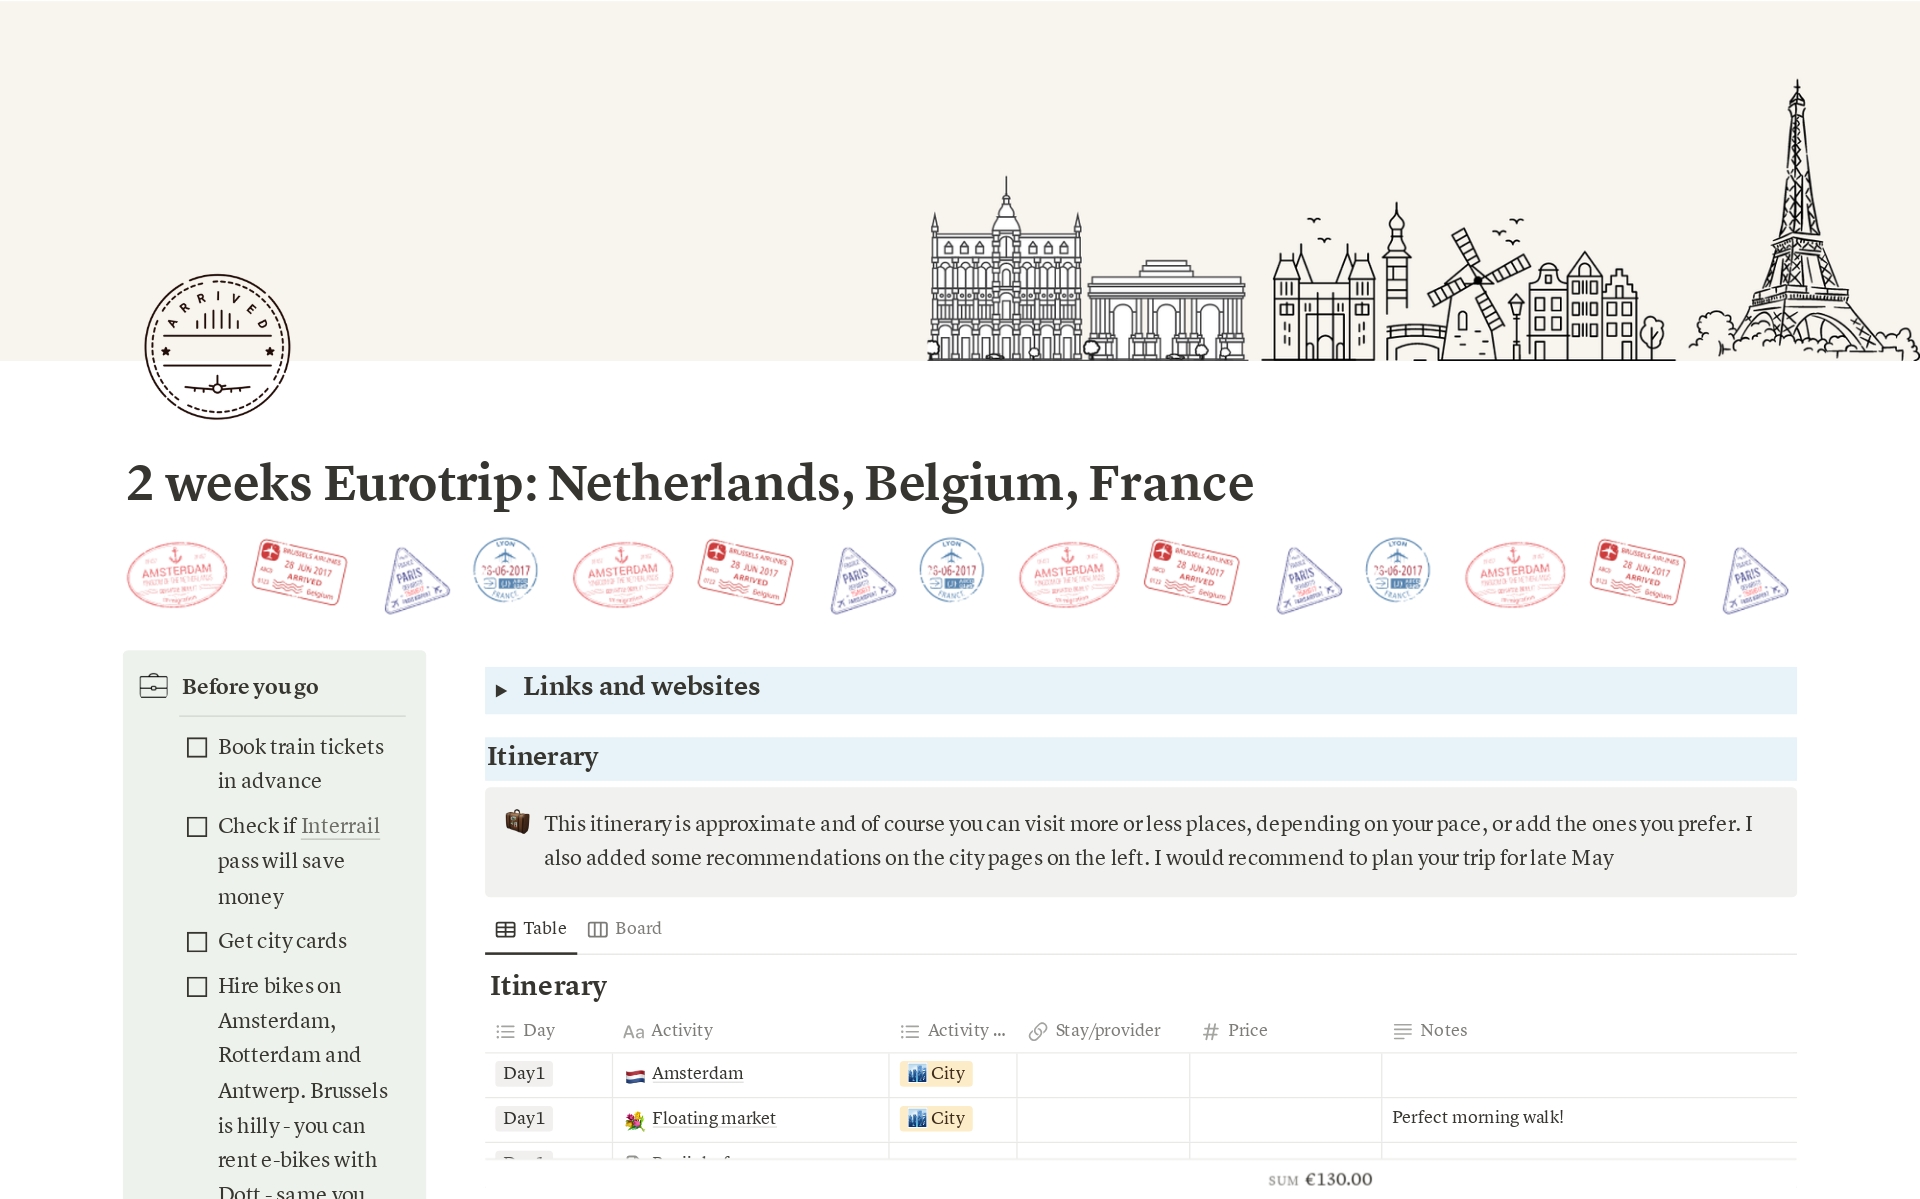 2 weeks Eurotrip: Netherlands, Belgium, France 님의 템플릿 미리보기